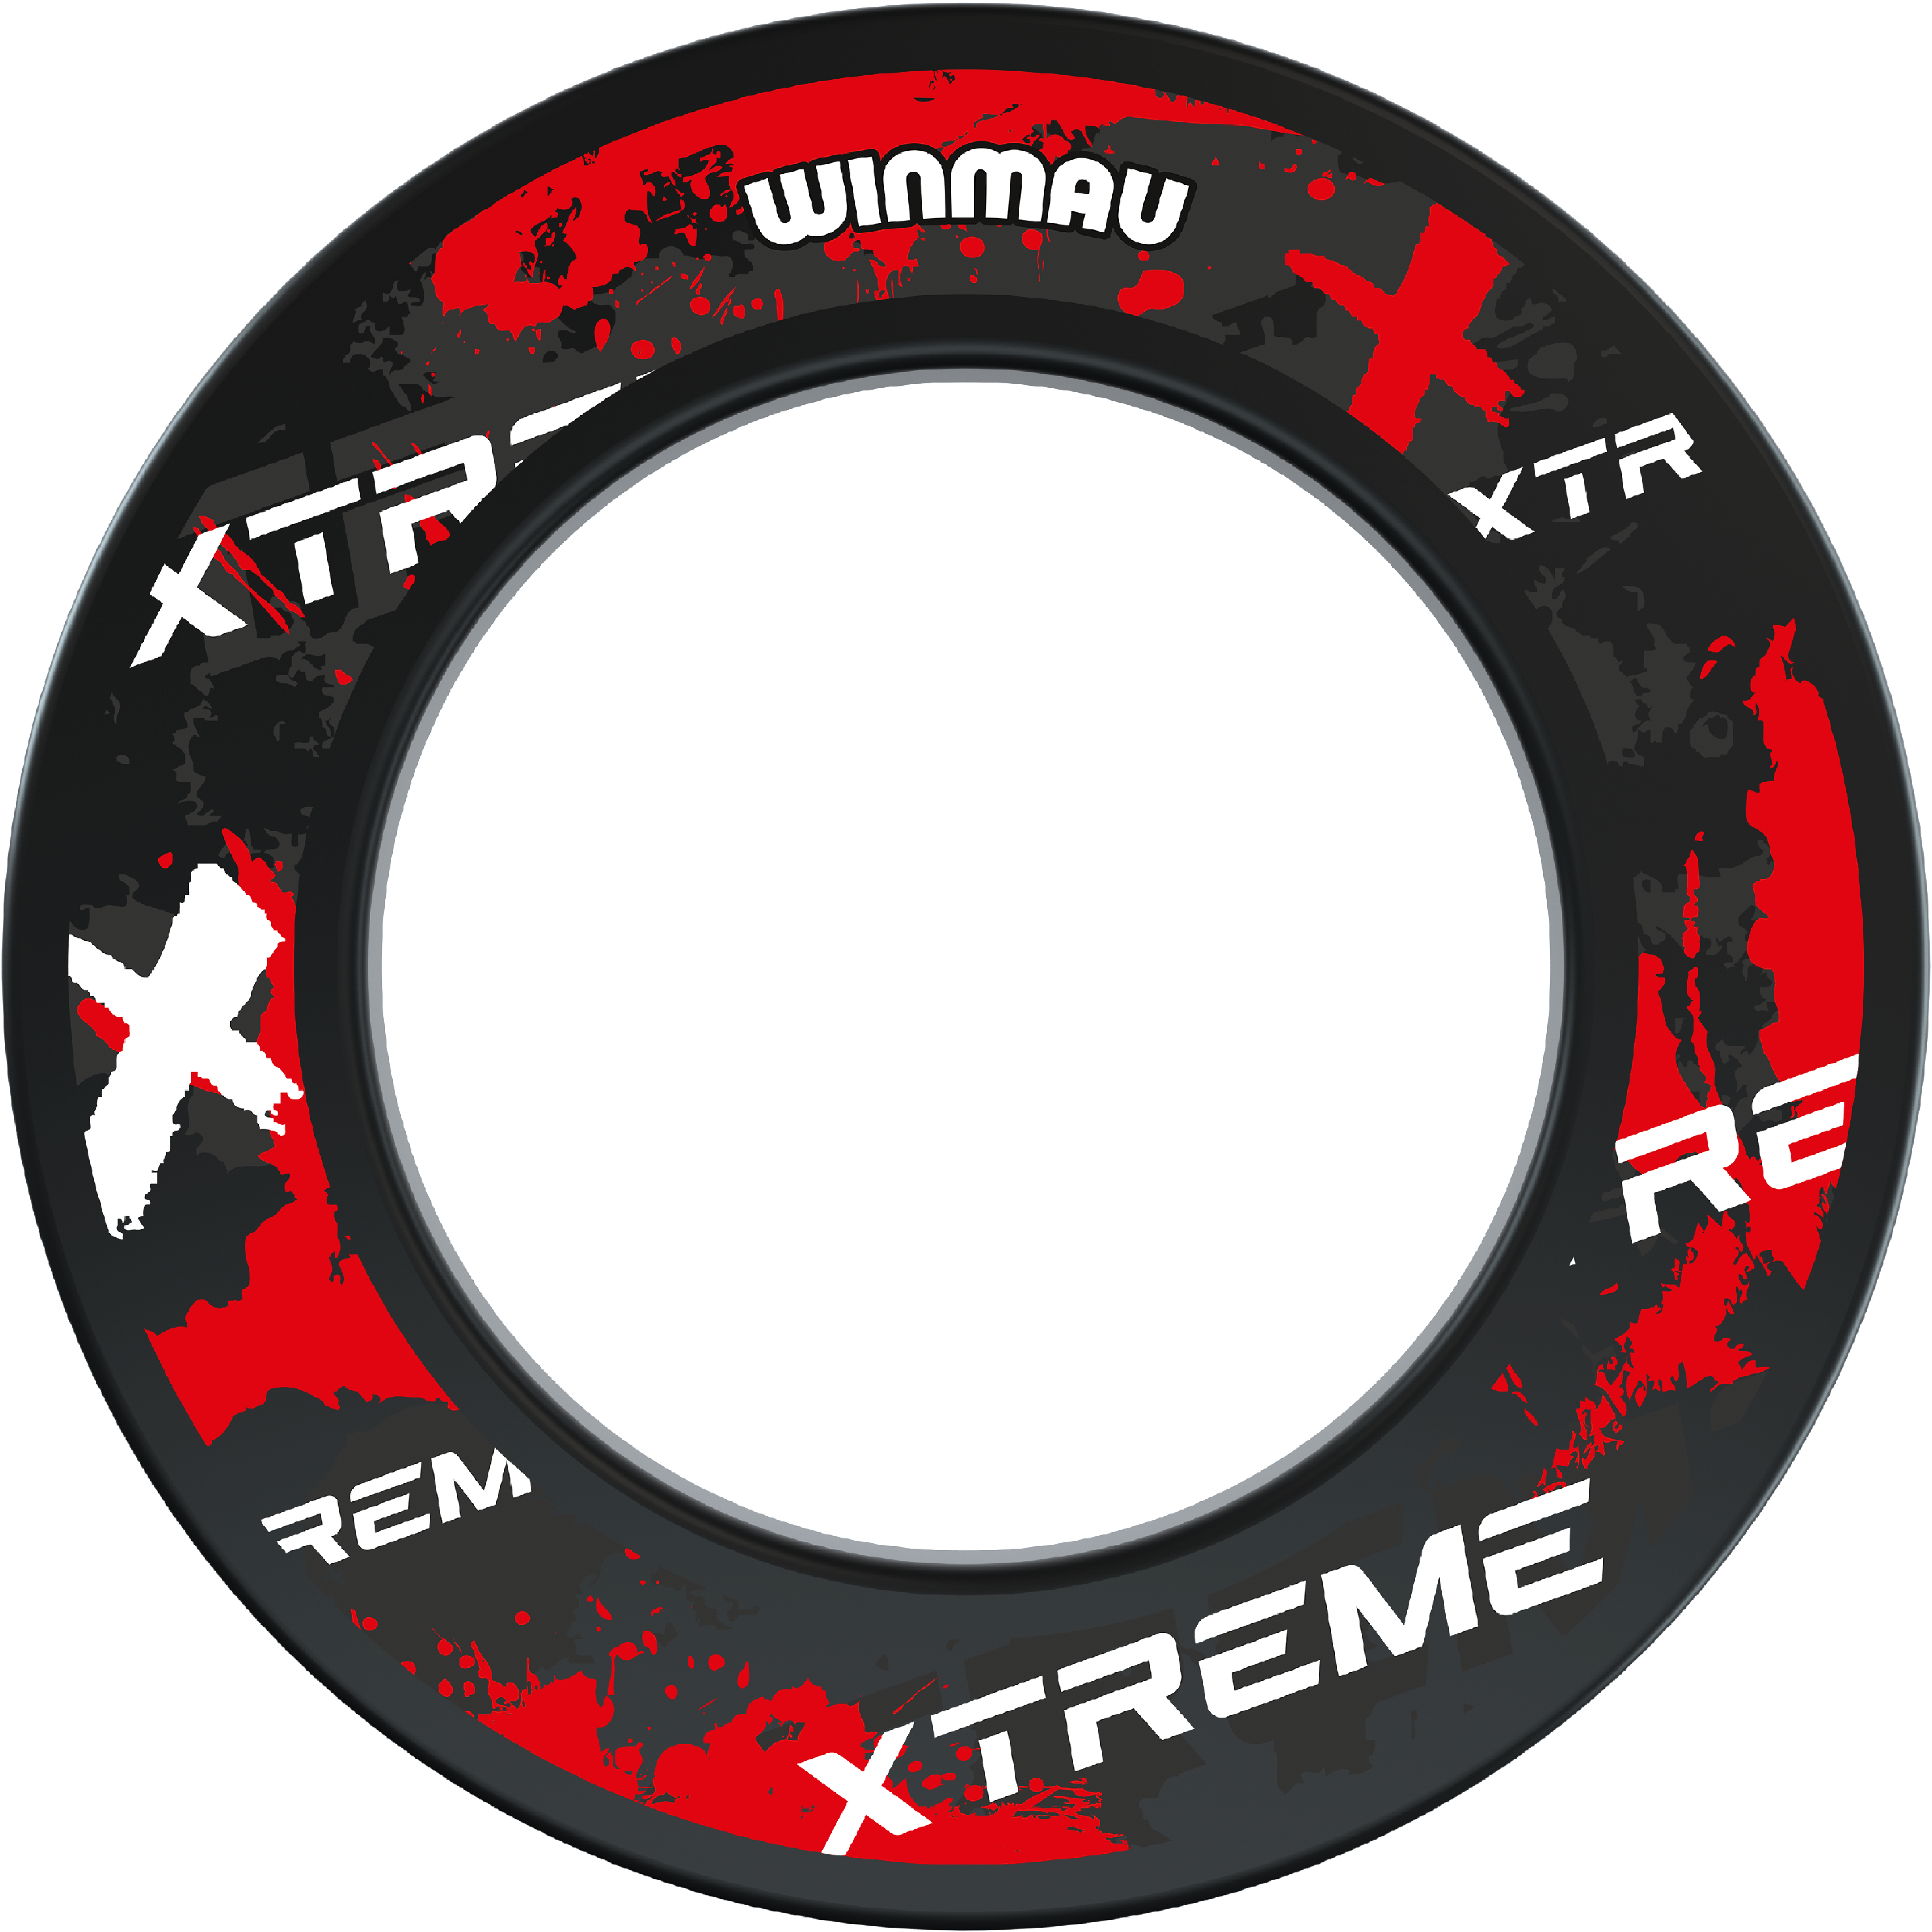 Winmau - Extreme Red Surround